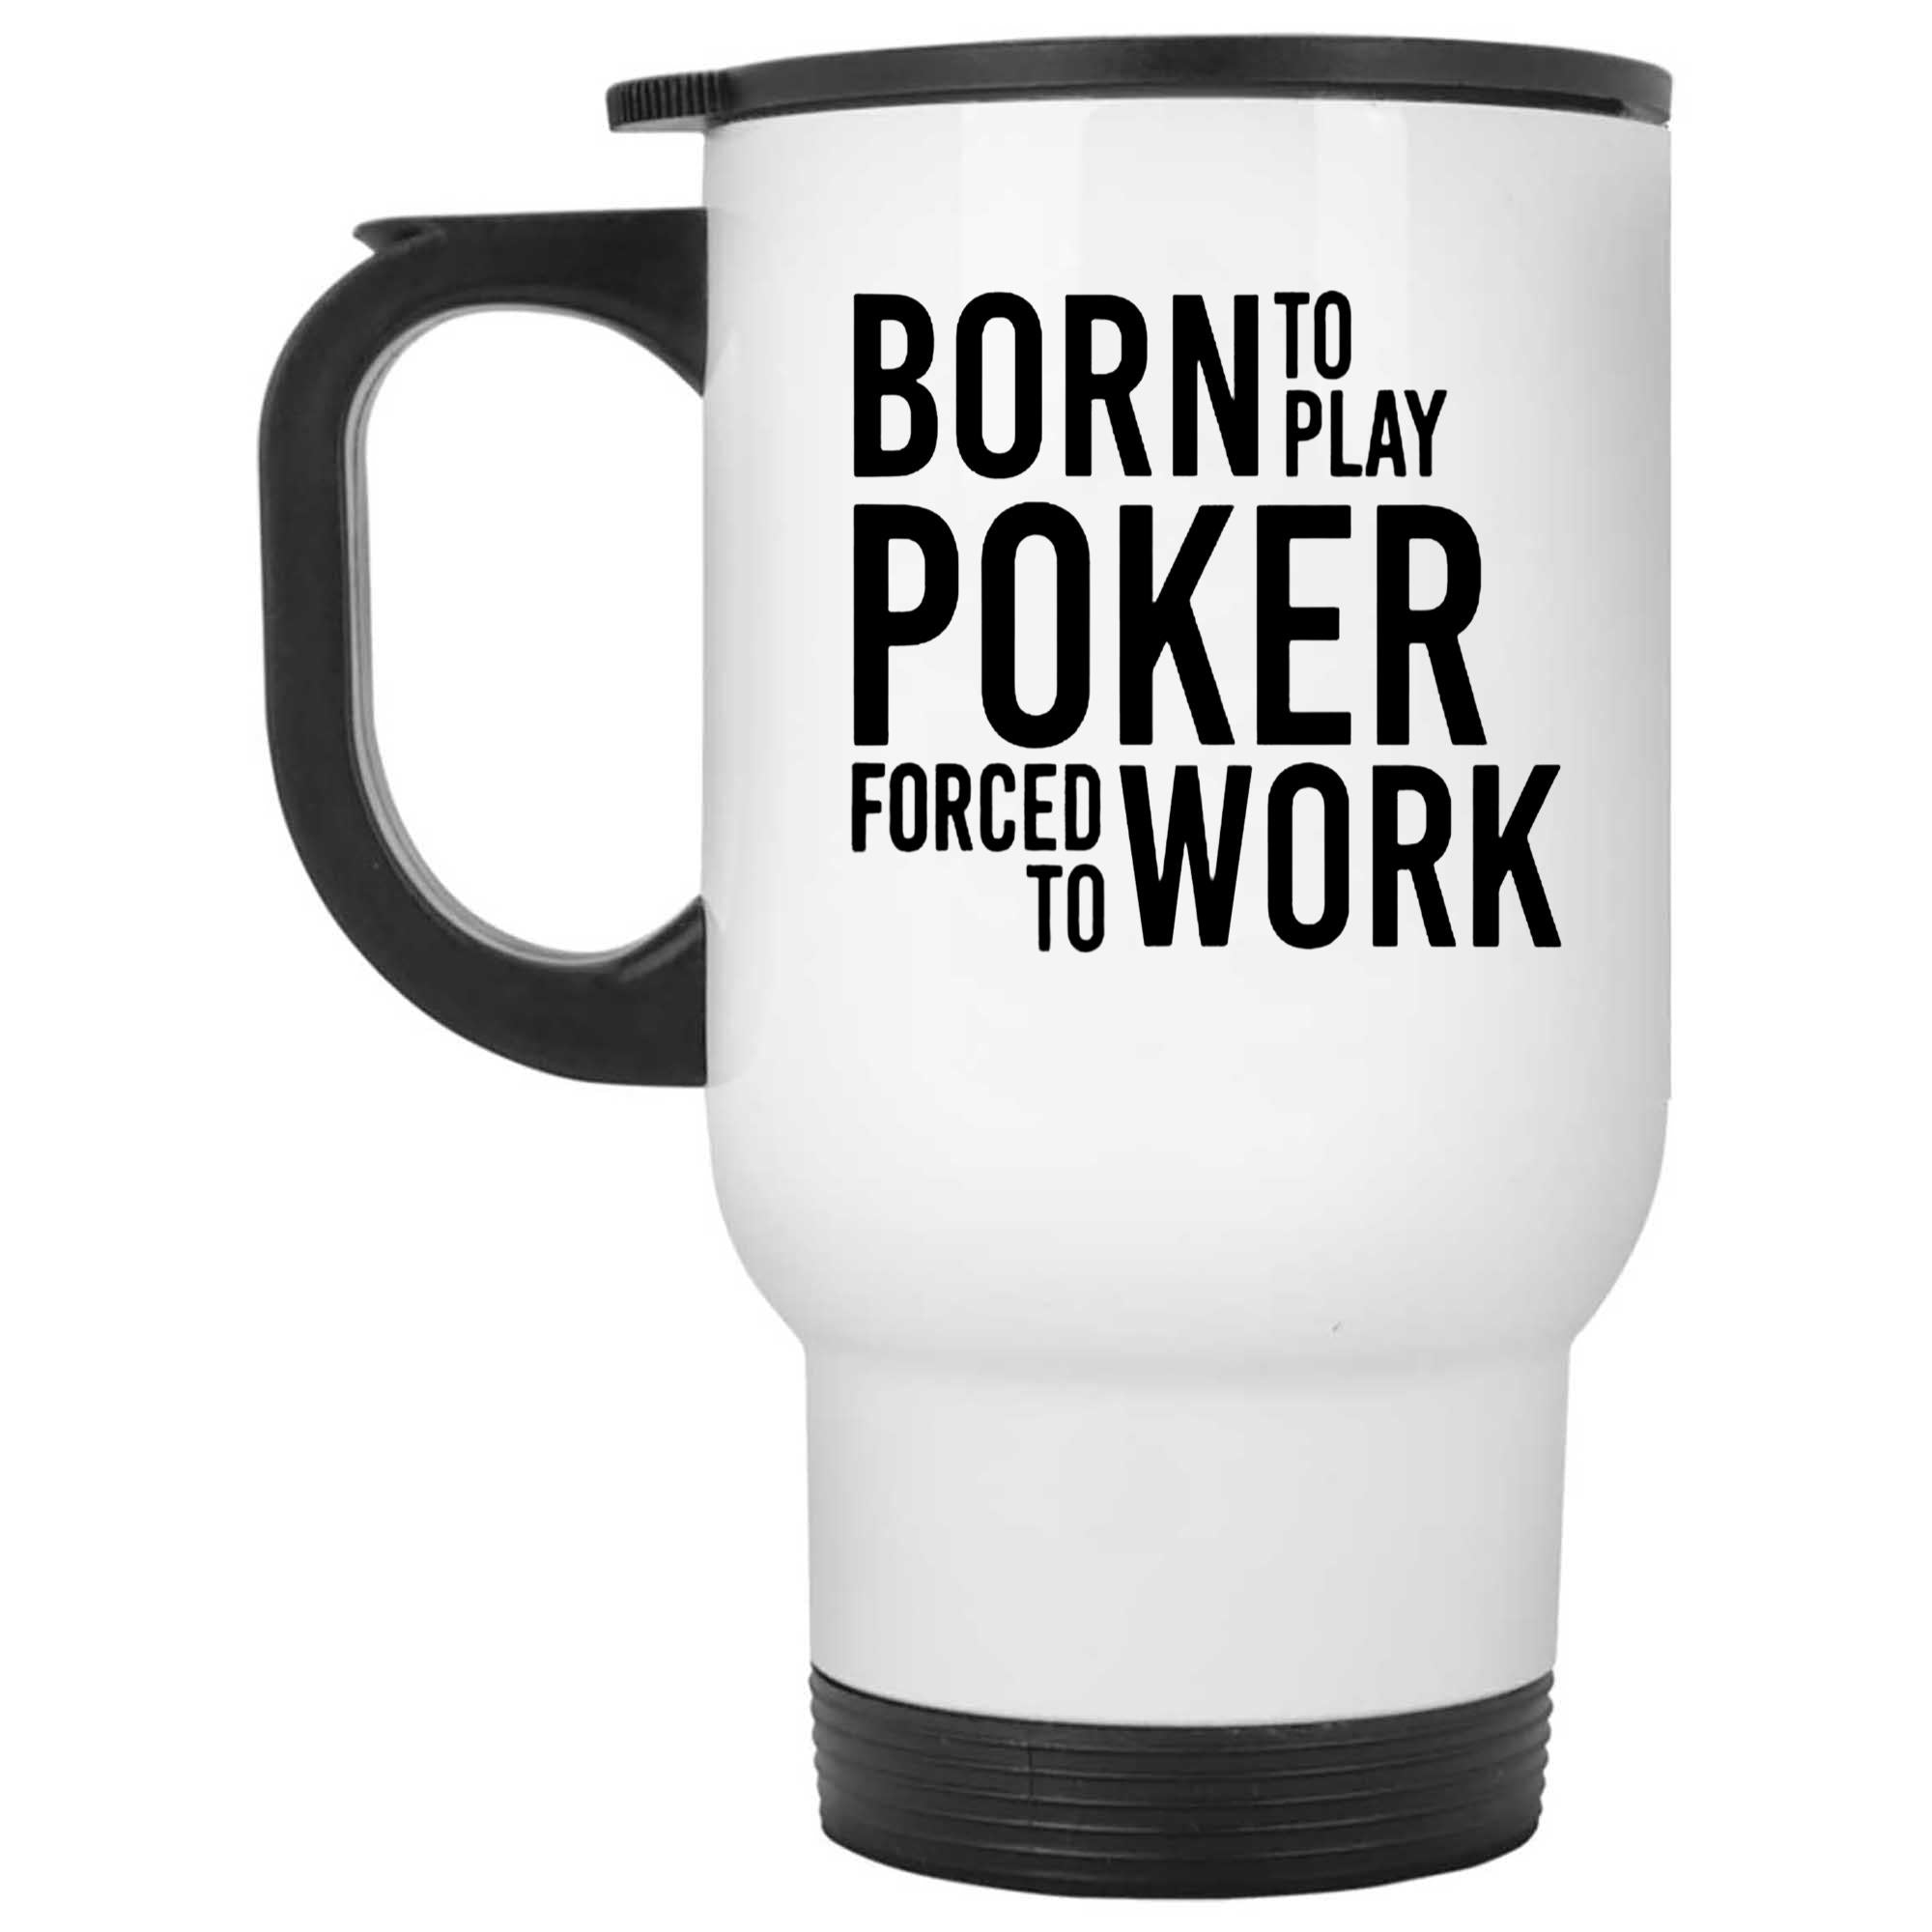 Skitongifts Funny Ceramic Novelty Coffee Mug Born To Play Poker Funny rt1buNz